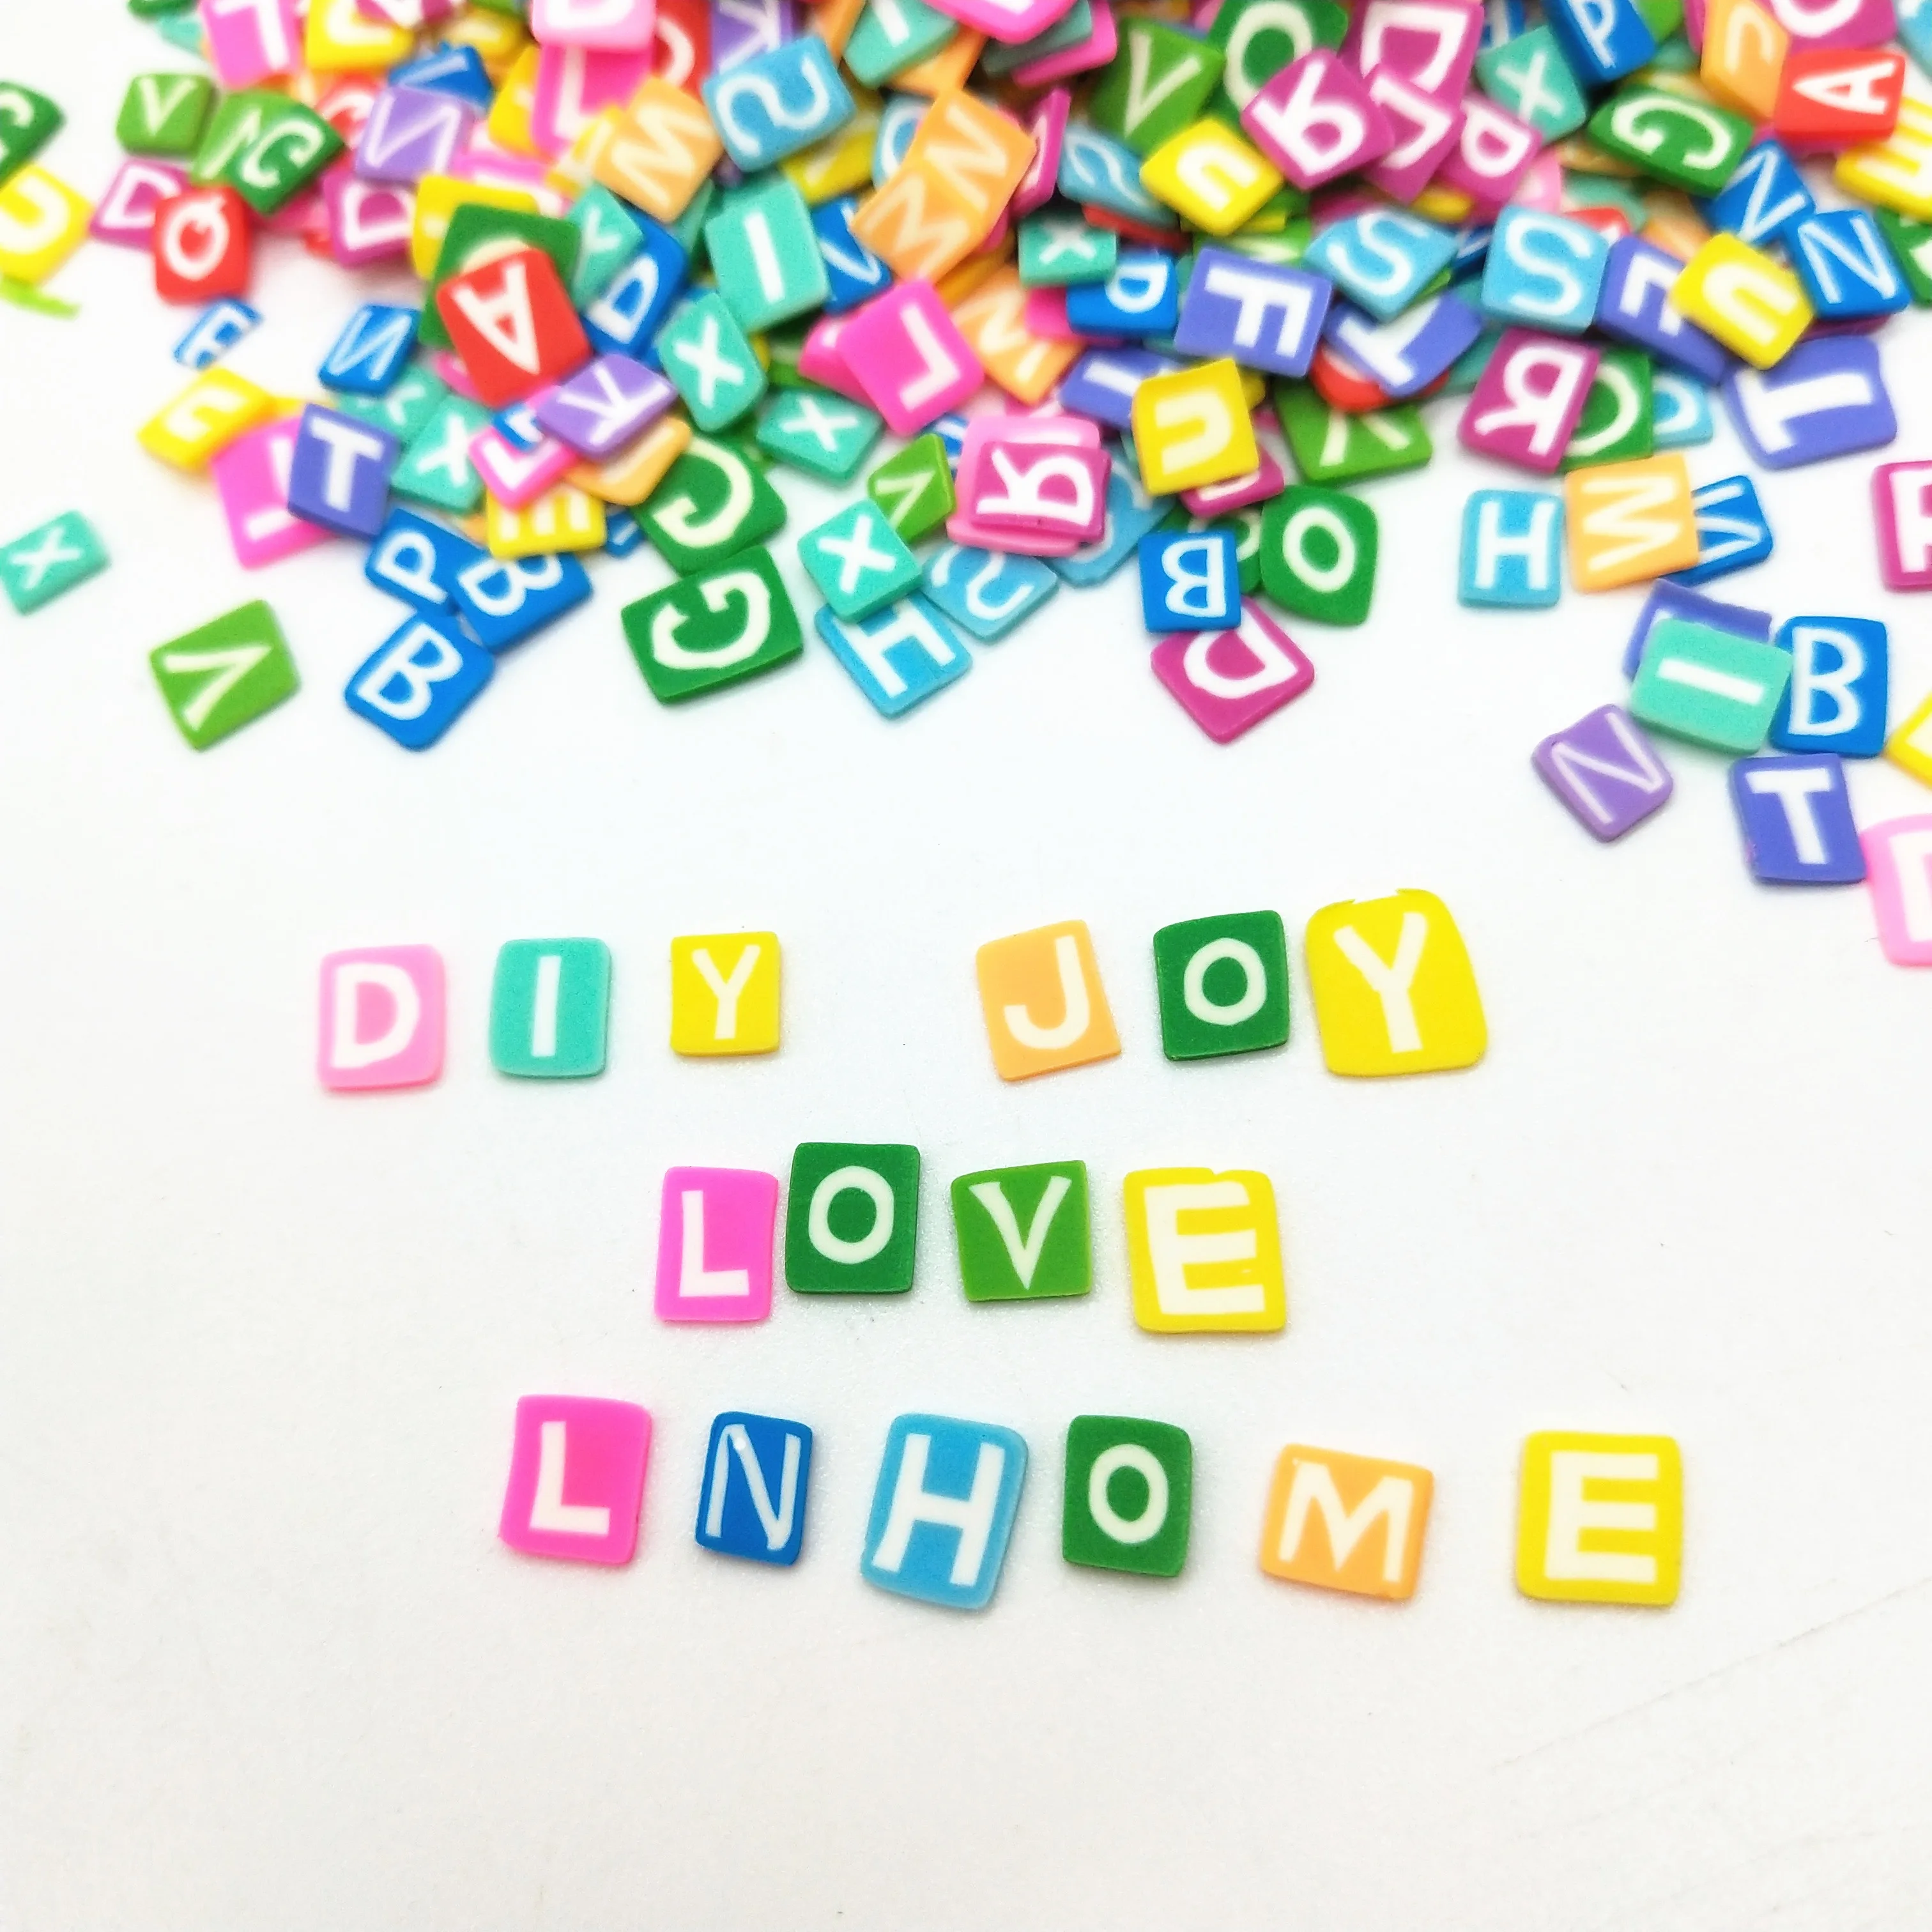 26 English alphabet/lot Assorted Mini Colorful Rubber Alphabet